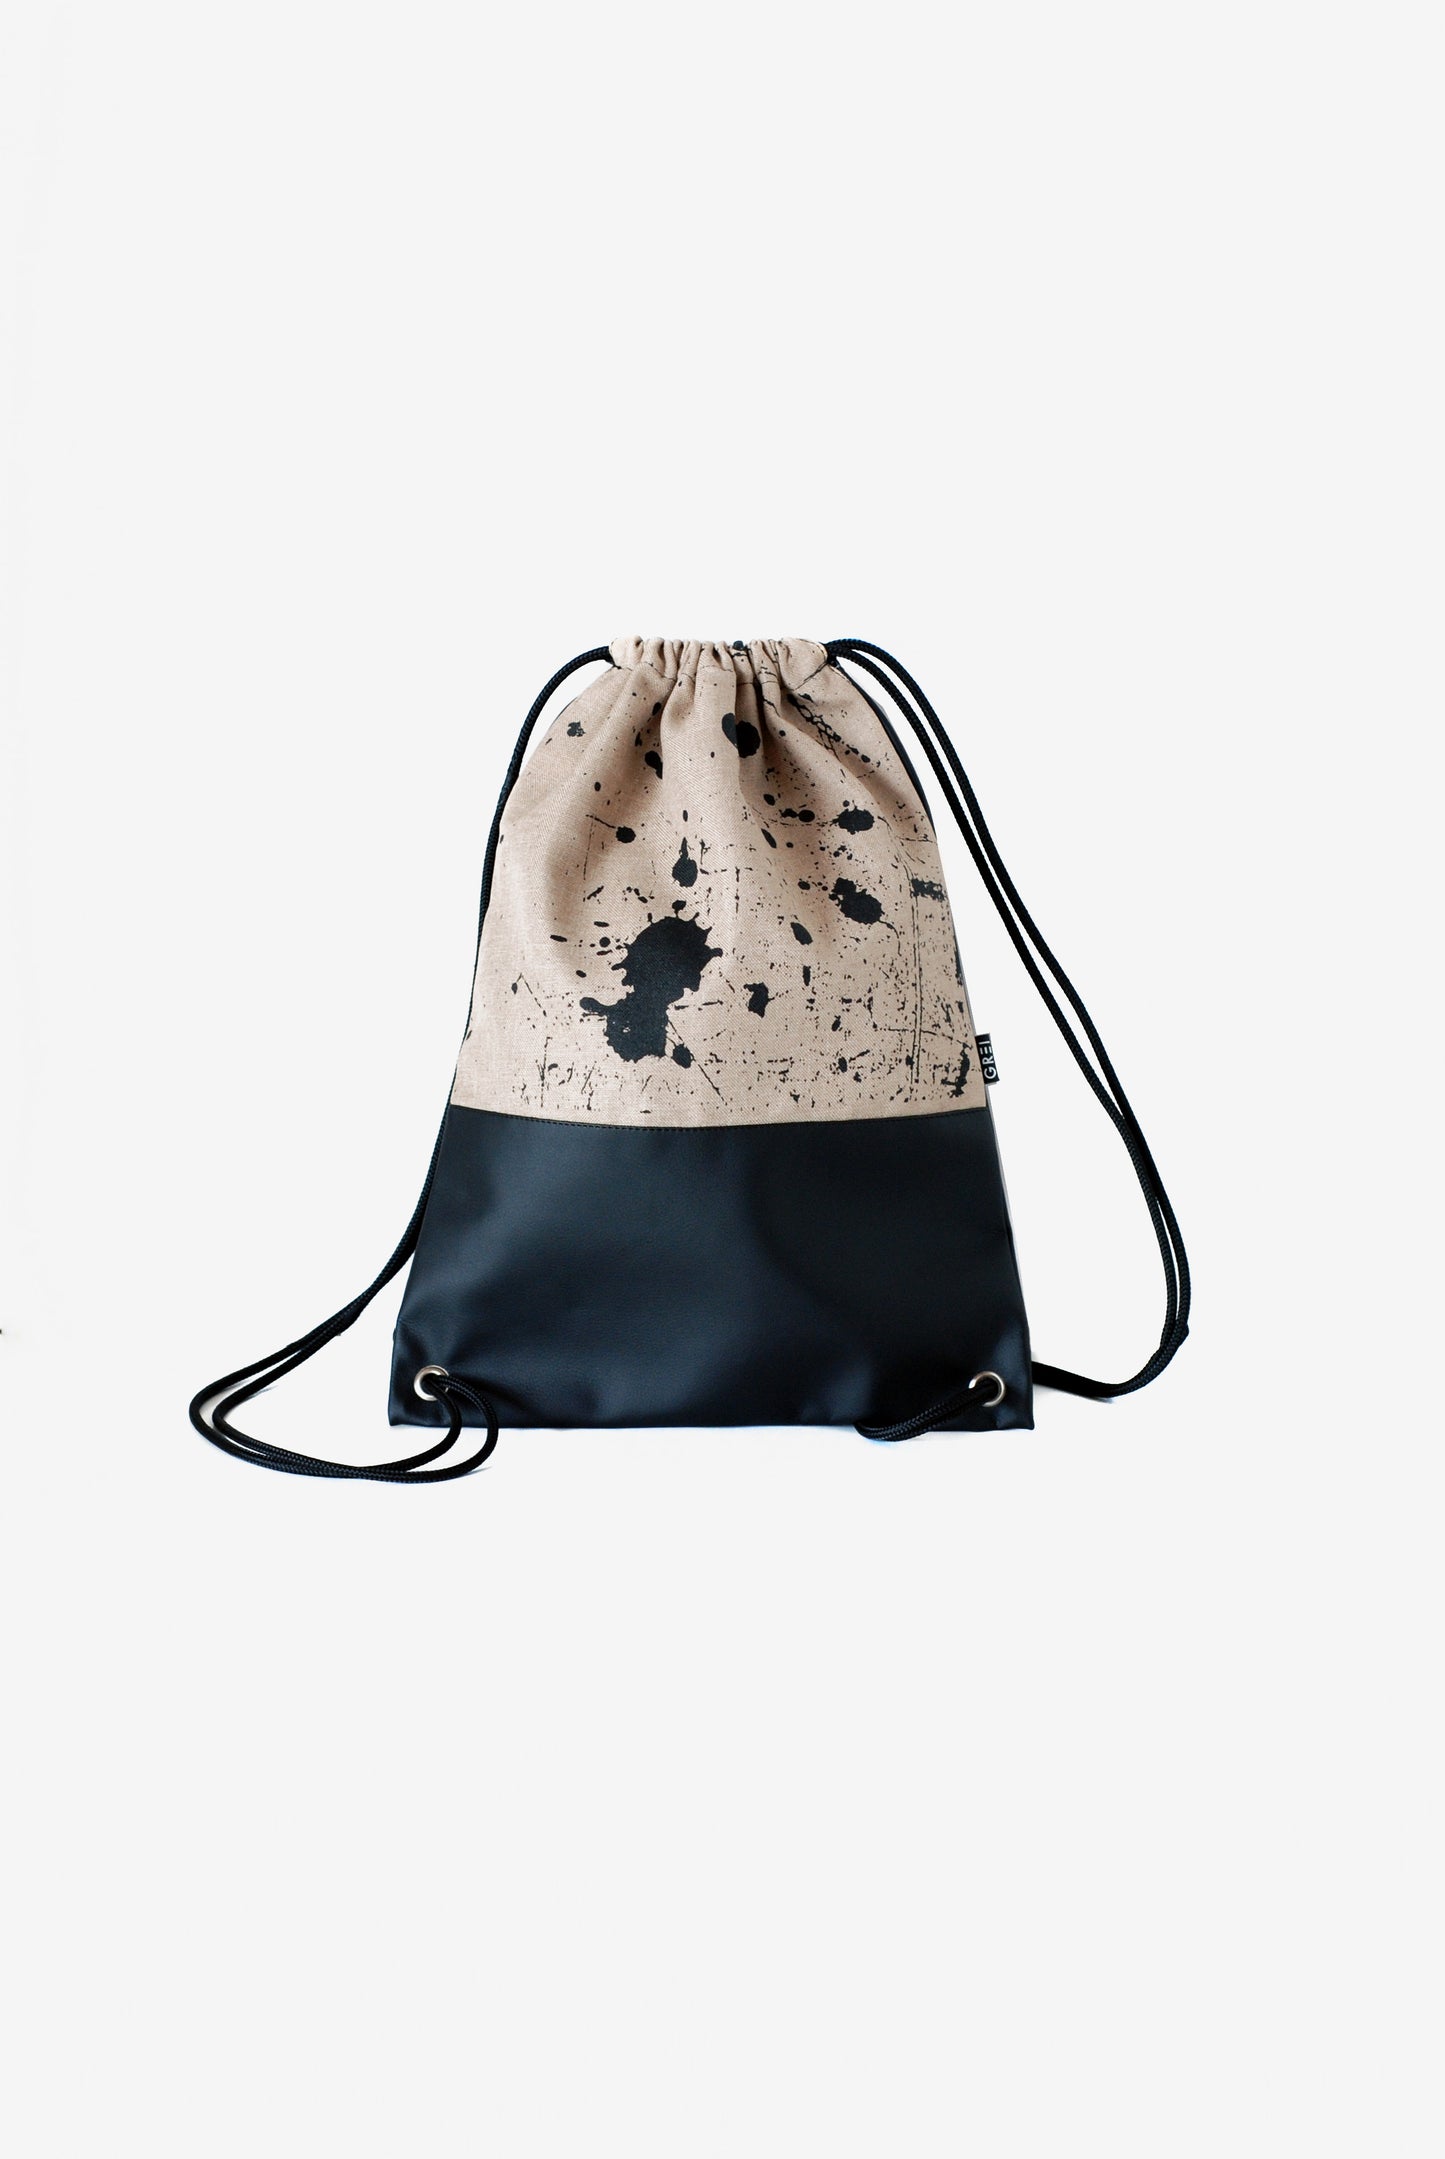 GREI Drawstring Backpack splash Beige-Black